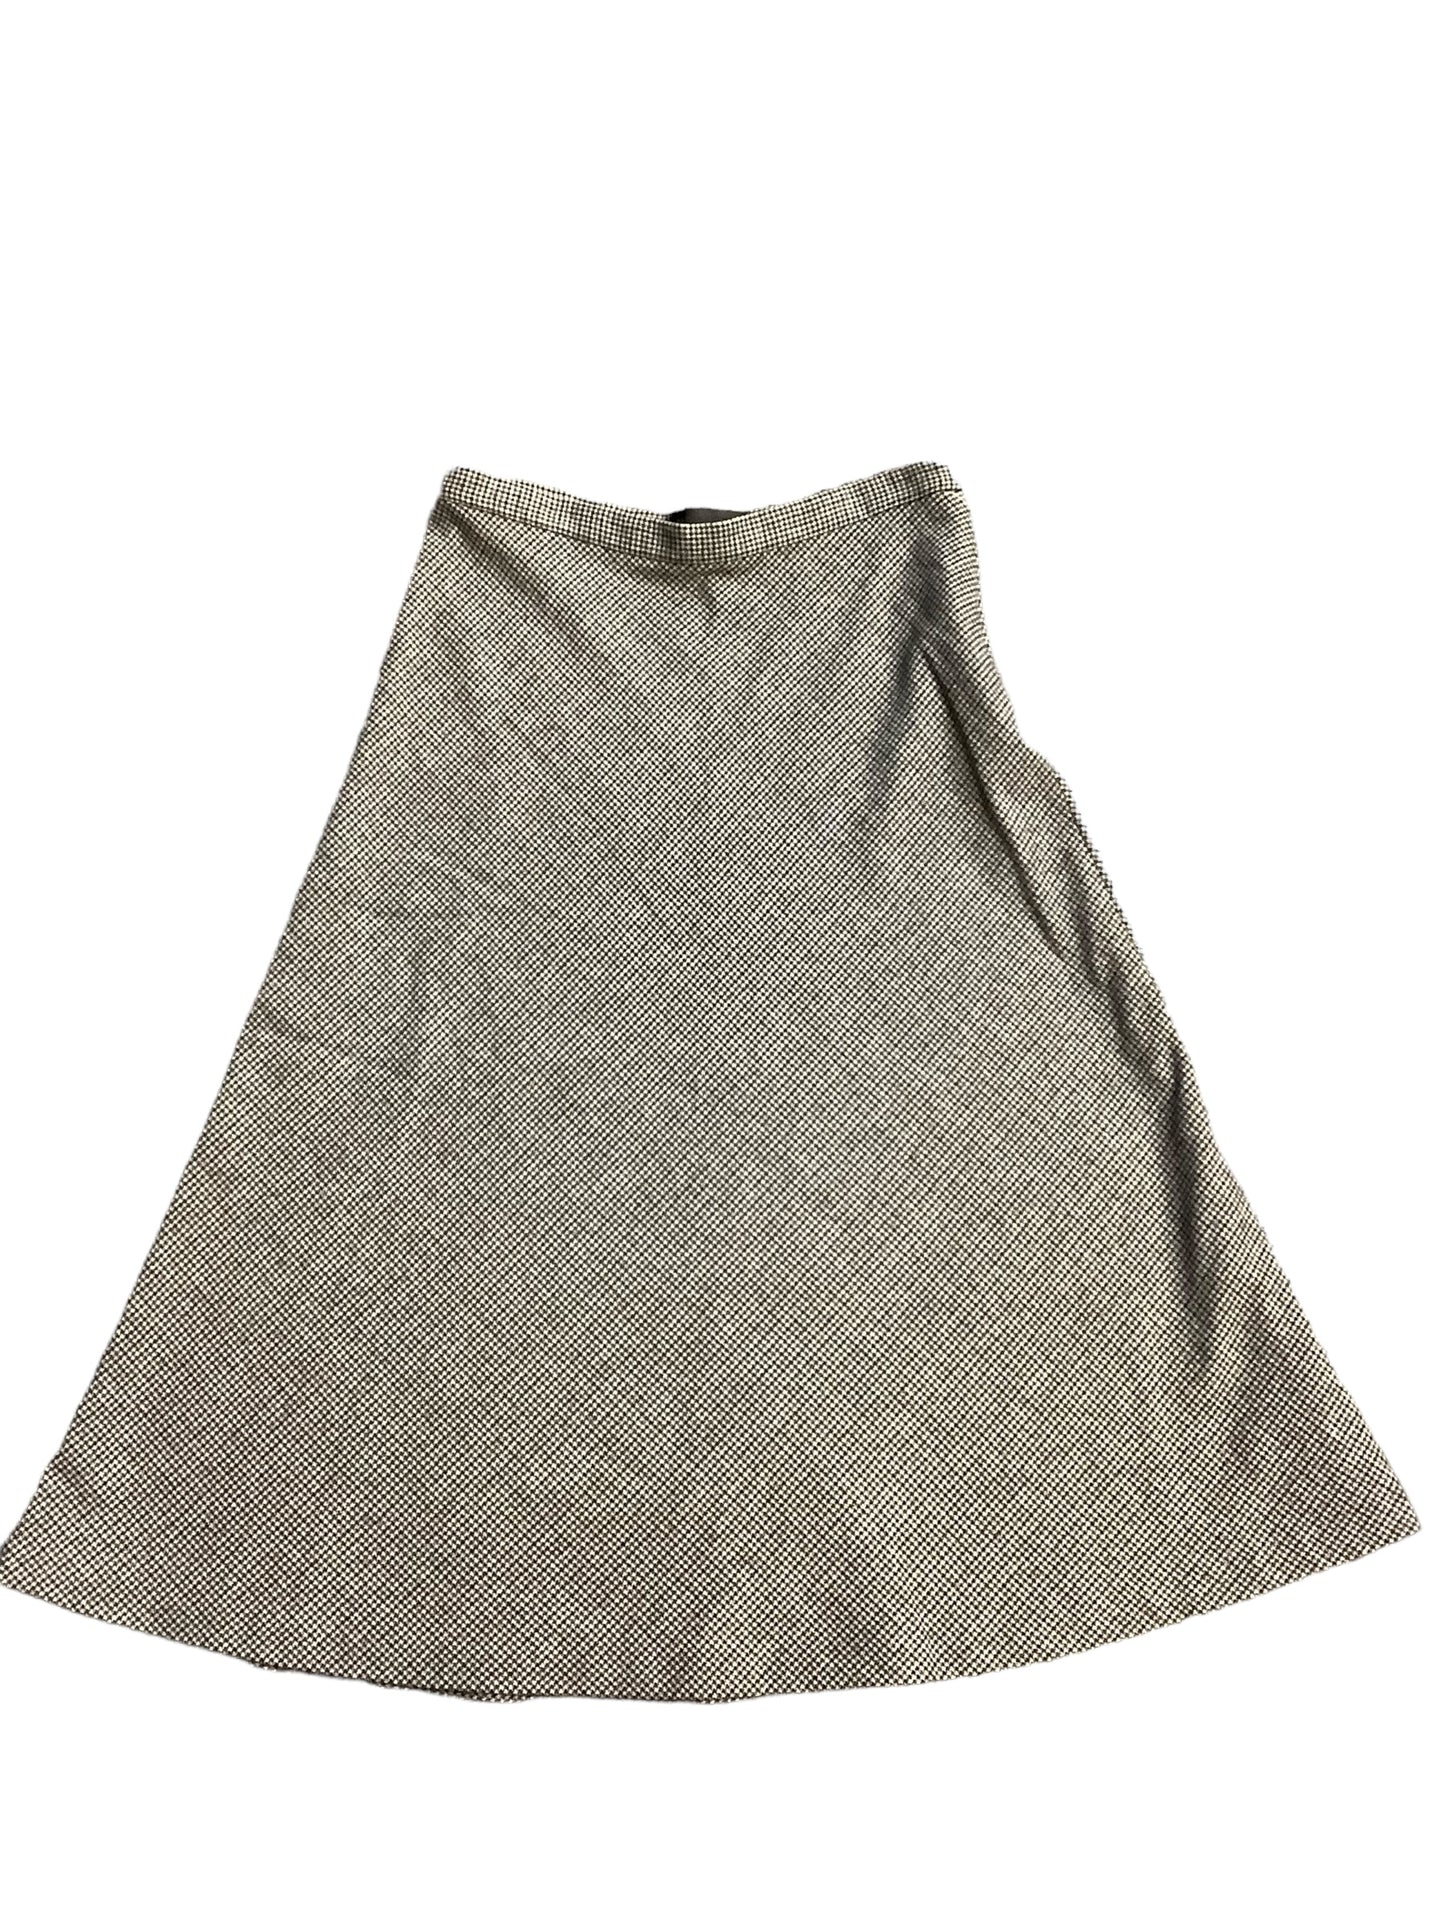 Skirt Designer By Nili Lotan  Size: 8